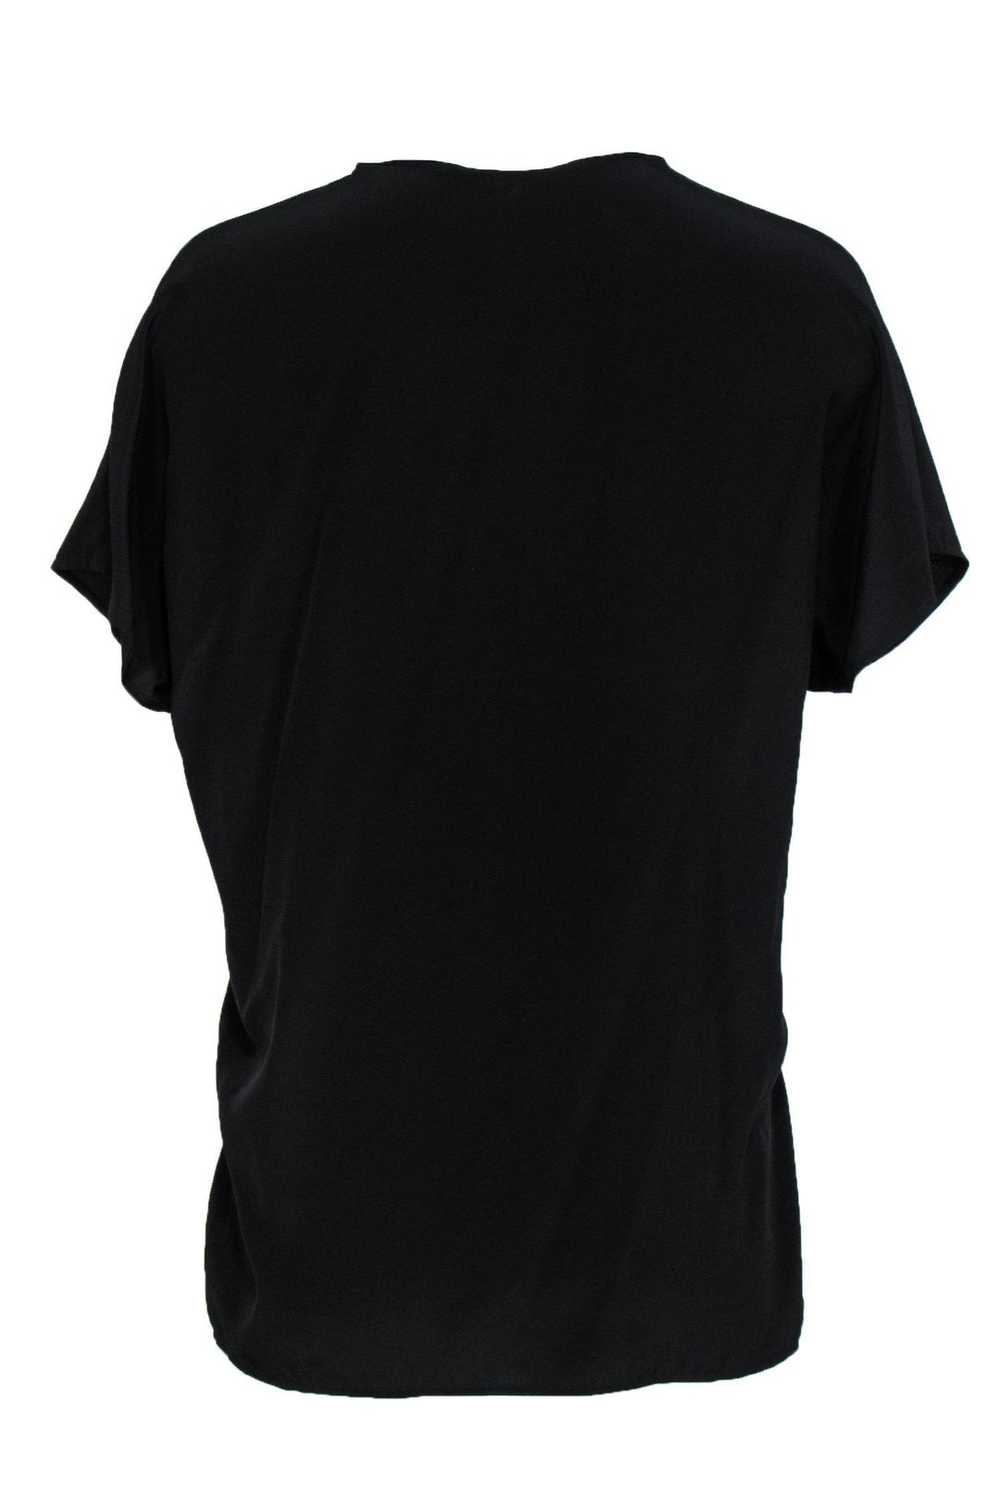 Vince - Black Short Sleeve Silk Top w/ Stitching … - image 3